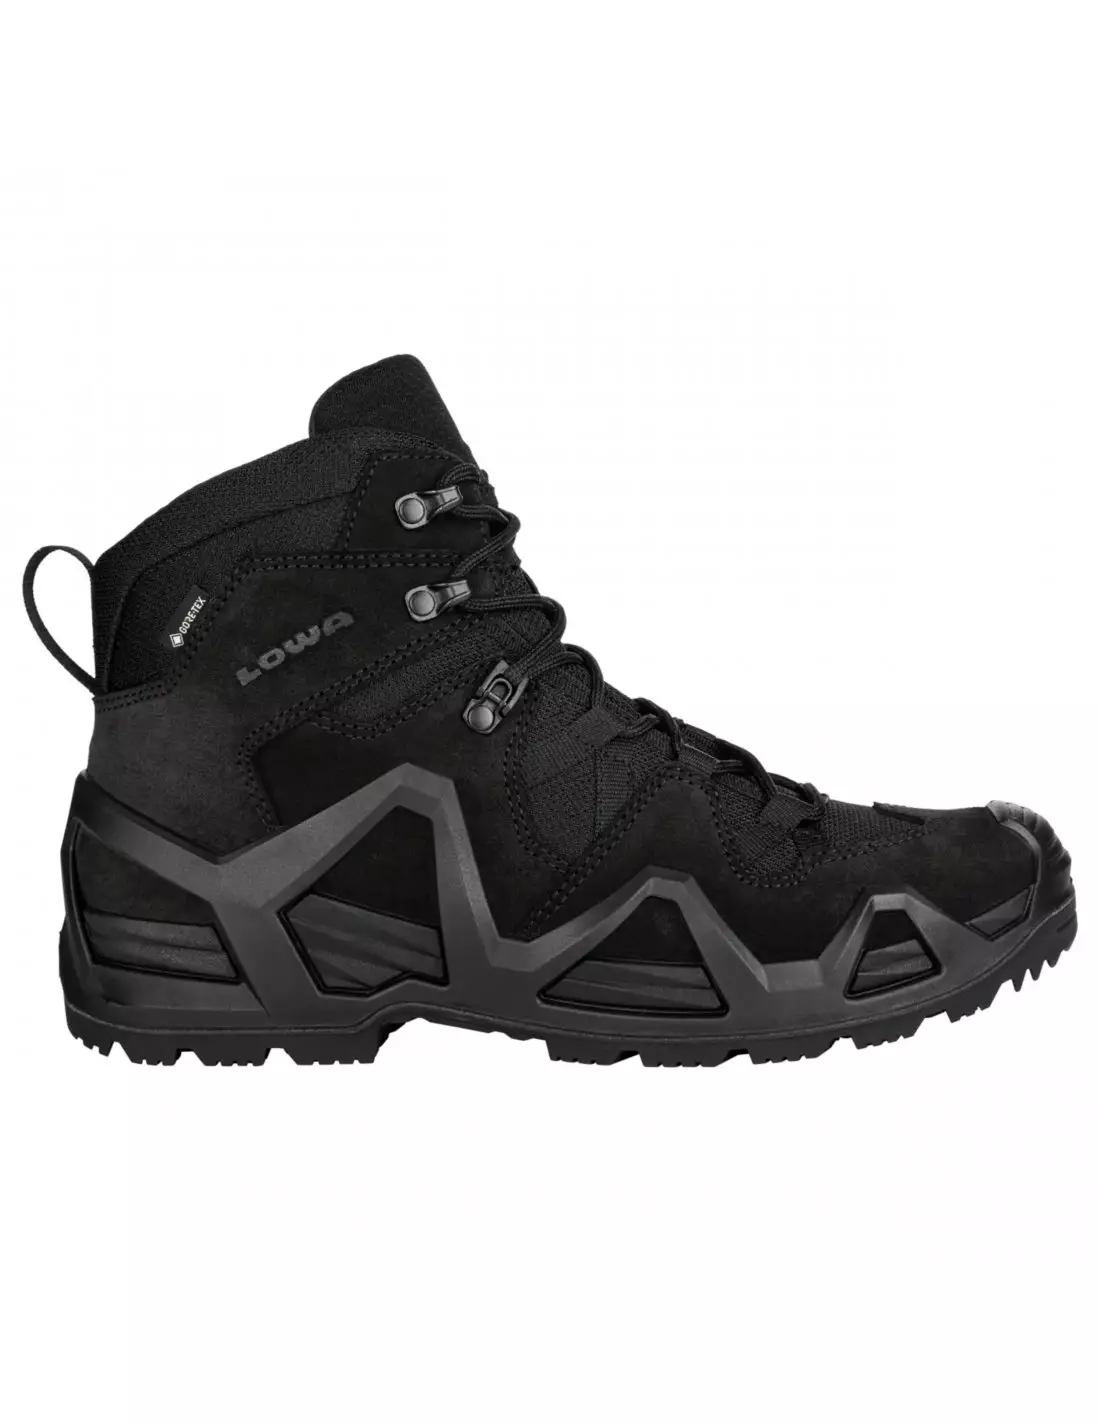 LOWA® ZEPHYR MK2 GTX MID Tactical Boots - Black